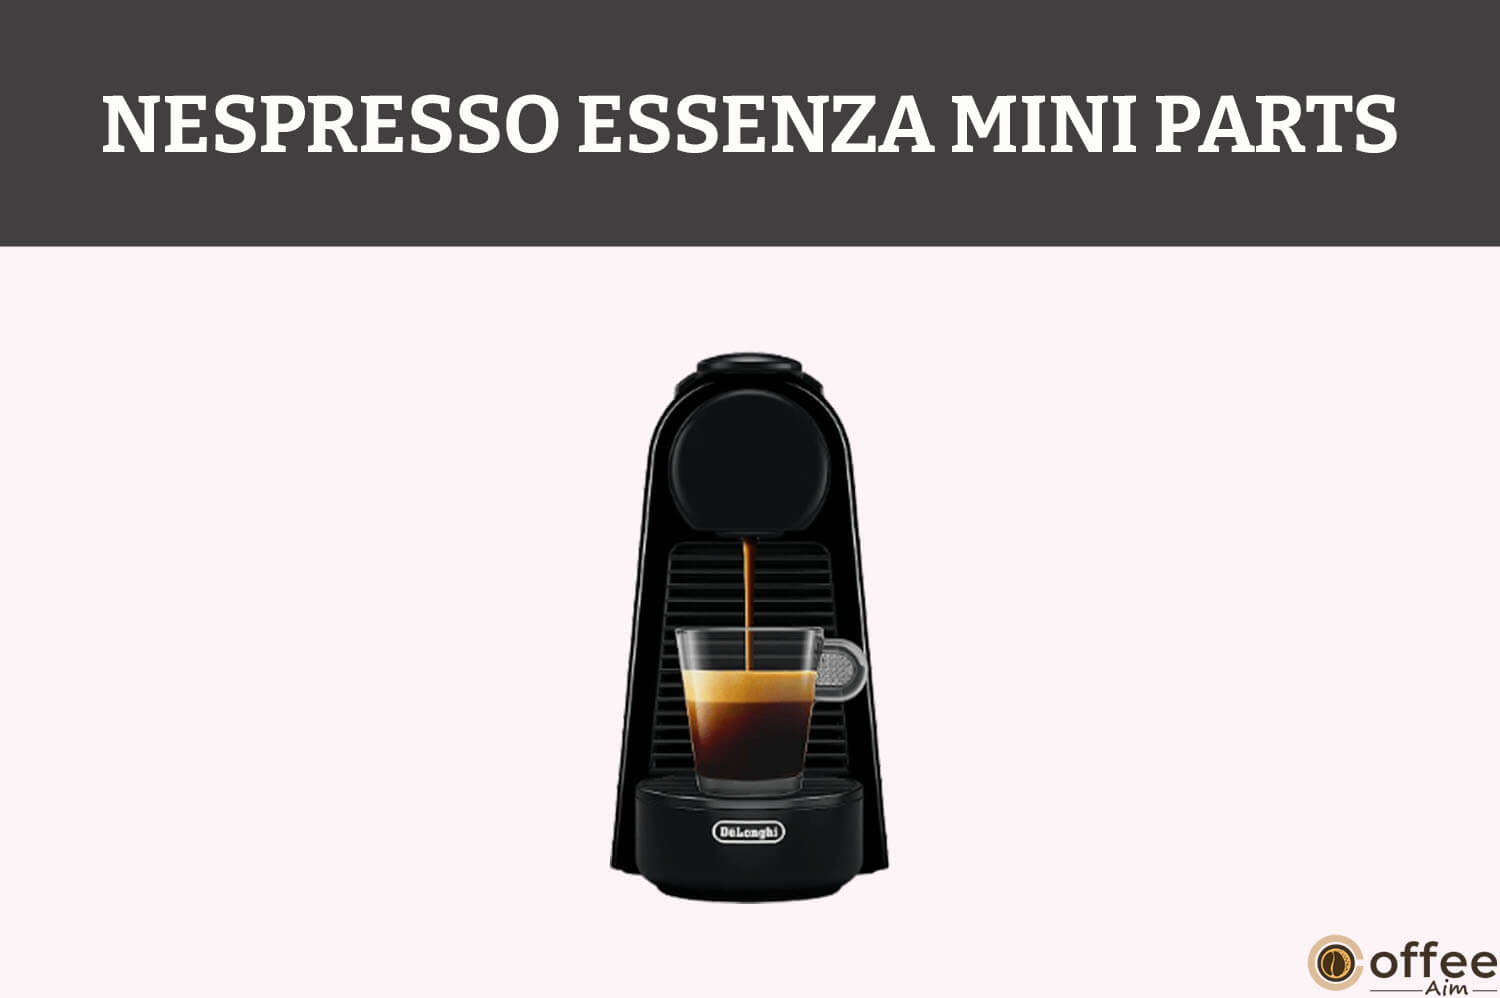 Featured image for the article "Nespresso Essenza Mini Parts"